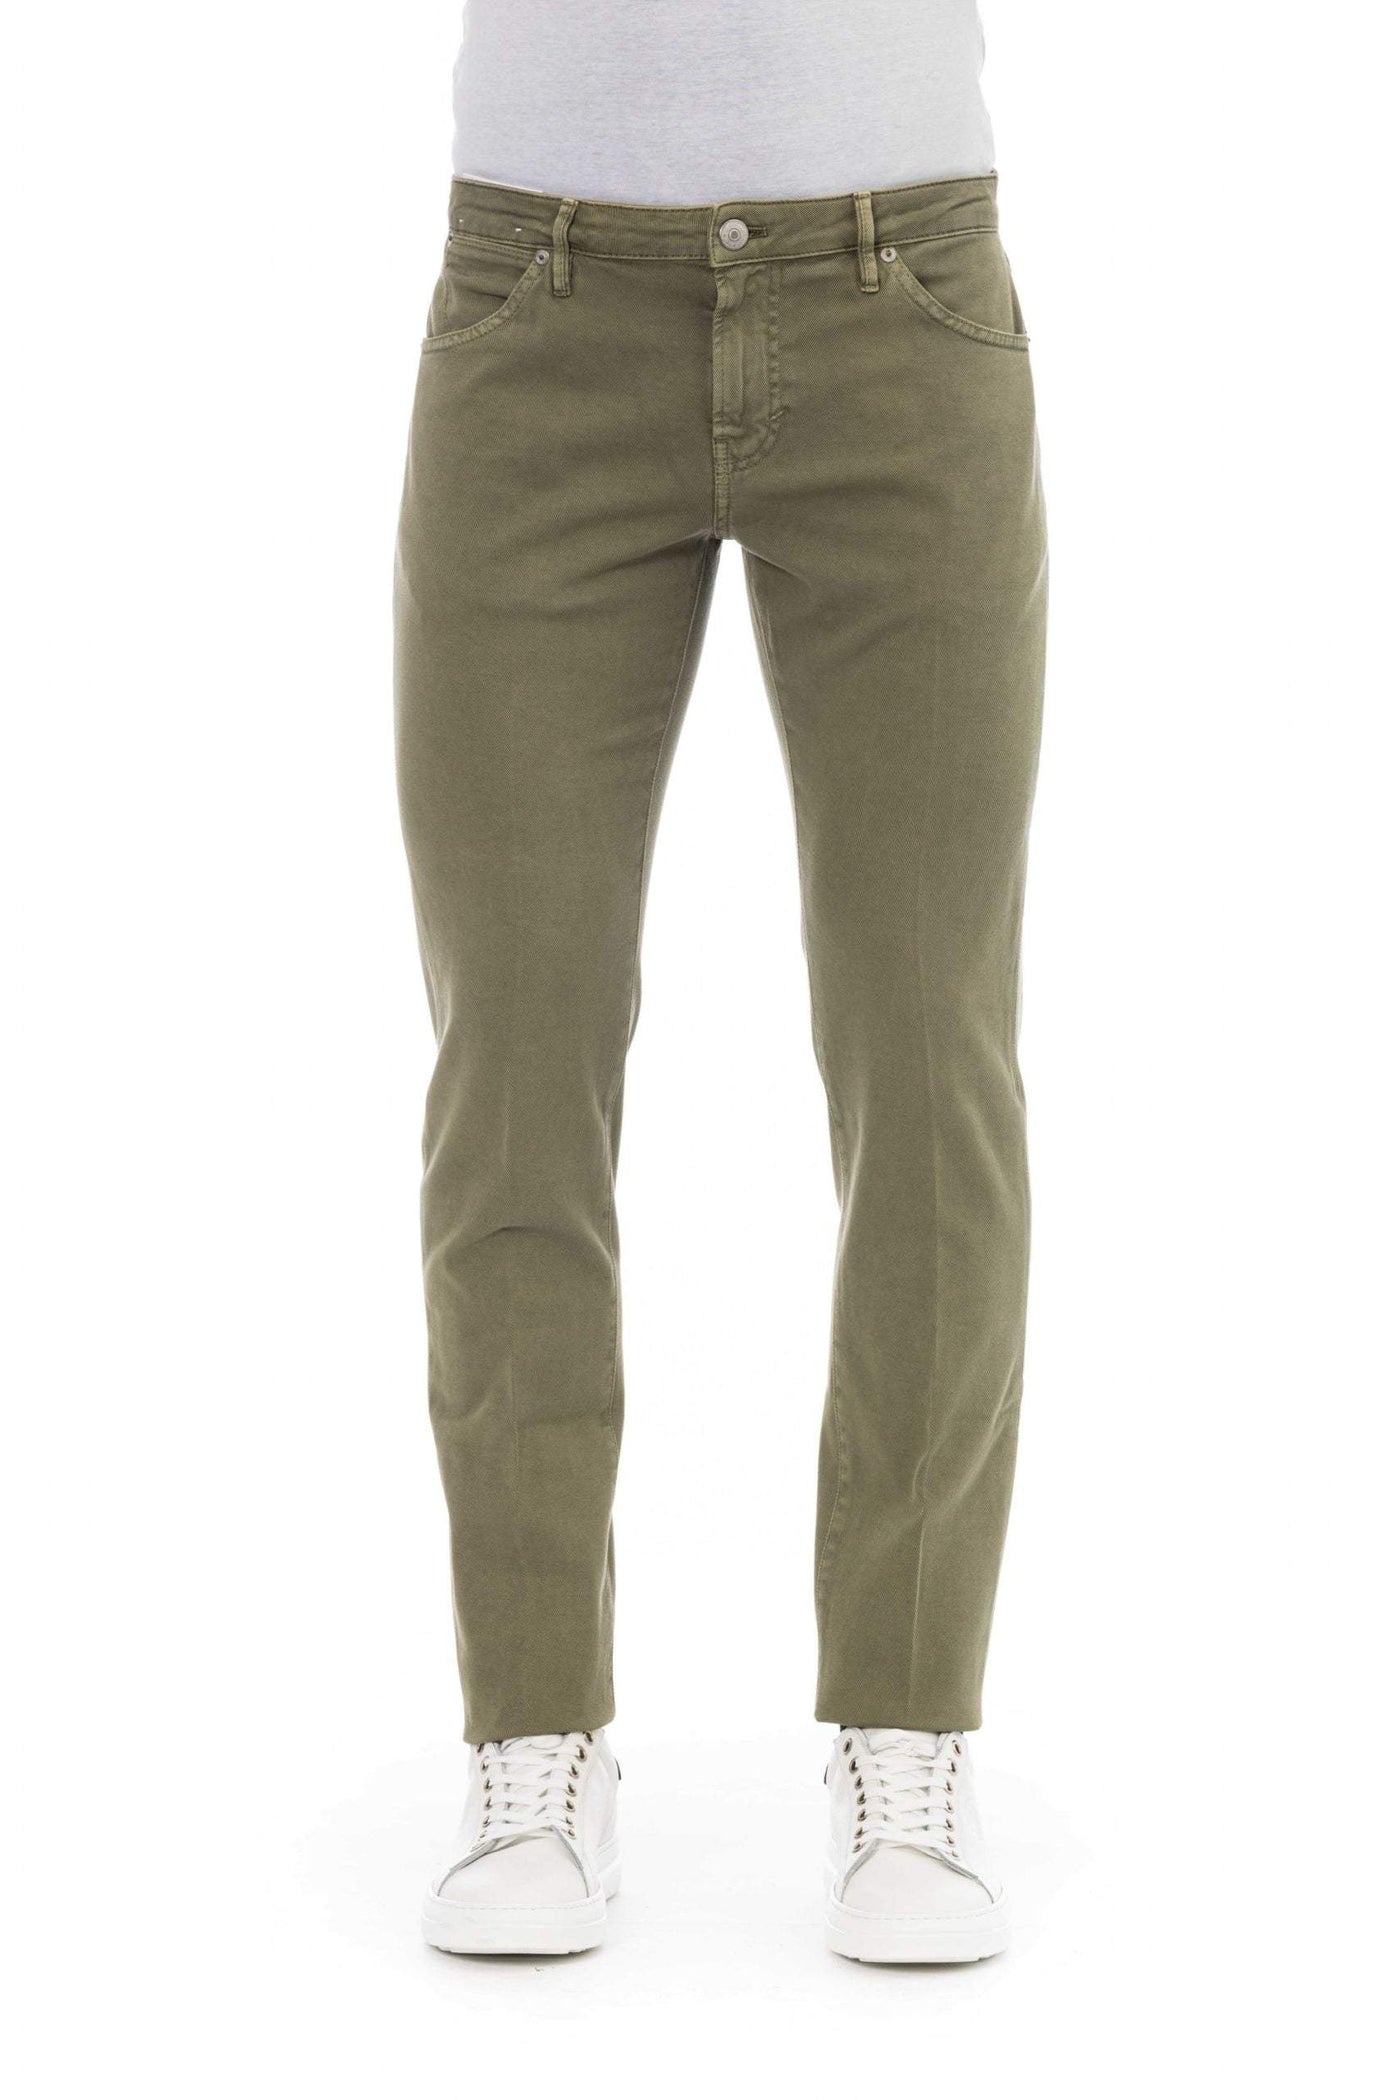 PT Torino Green Cotton Jeans & Pant #men, feed-1, Green, Jeans & Pants - Men - Clothing, PT Torino, W29, W30, W31, W32, W33, W34, W36, W38 at SEYMAYKA